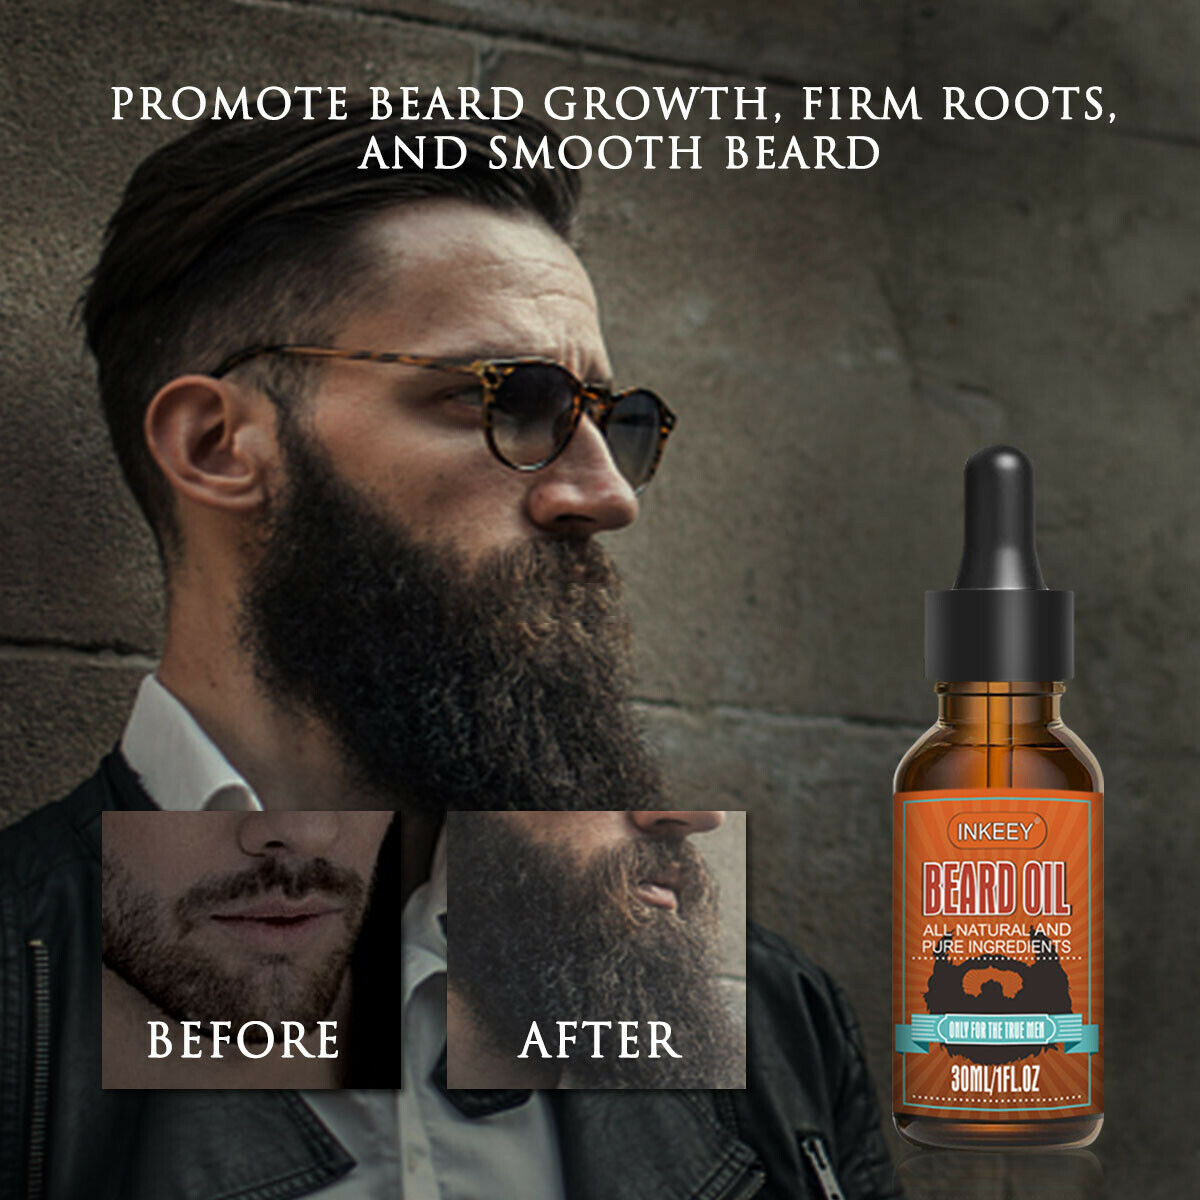 Beard Oil For MEN Hair Growth Oil Serum Mustache Grooming Growing Moisturizer US